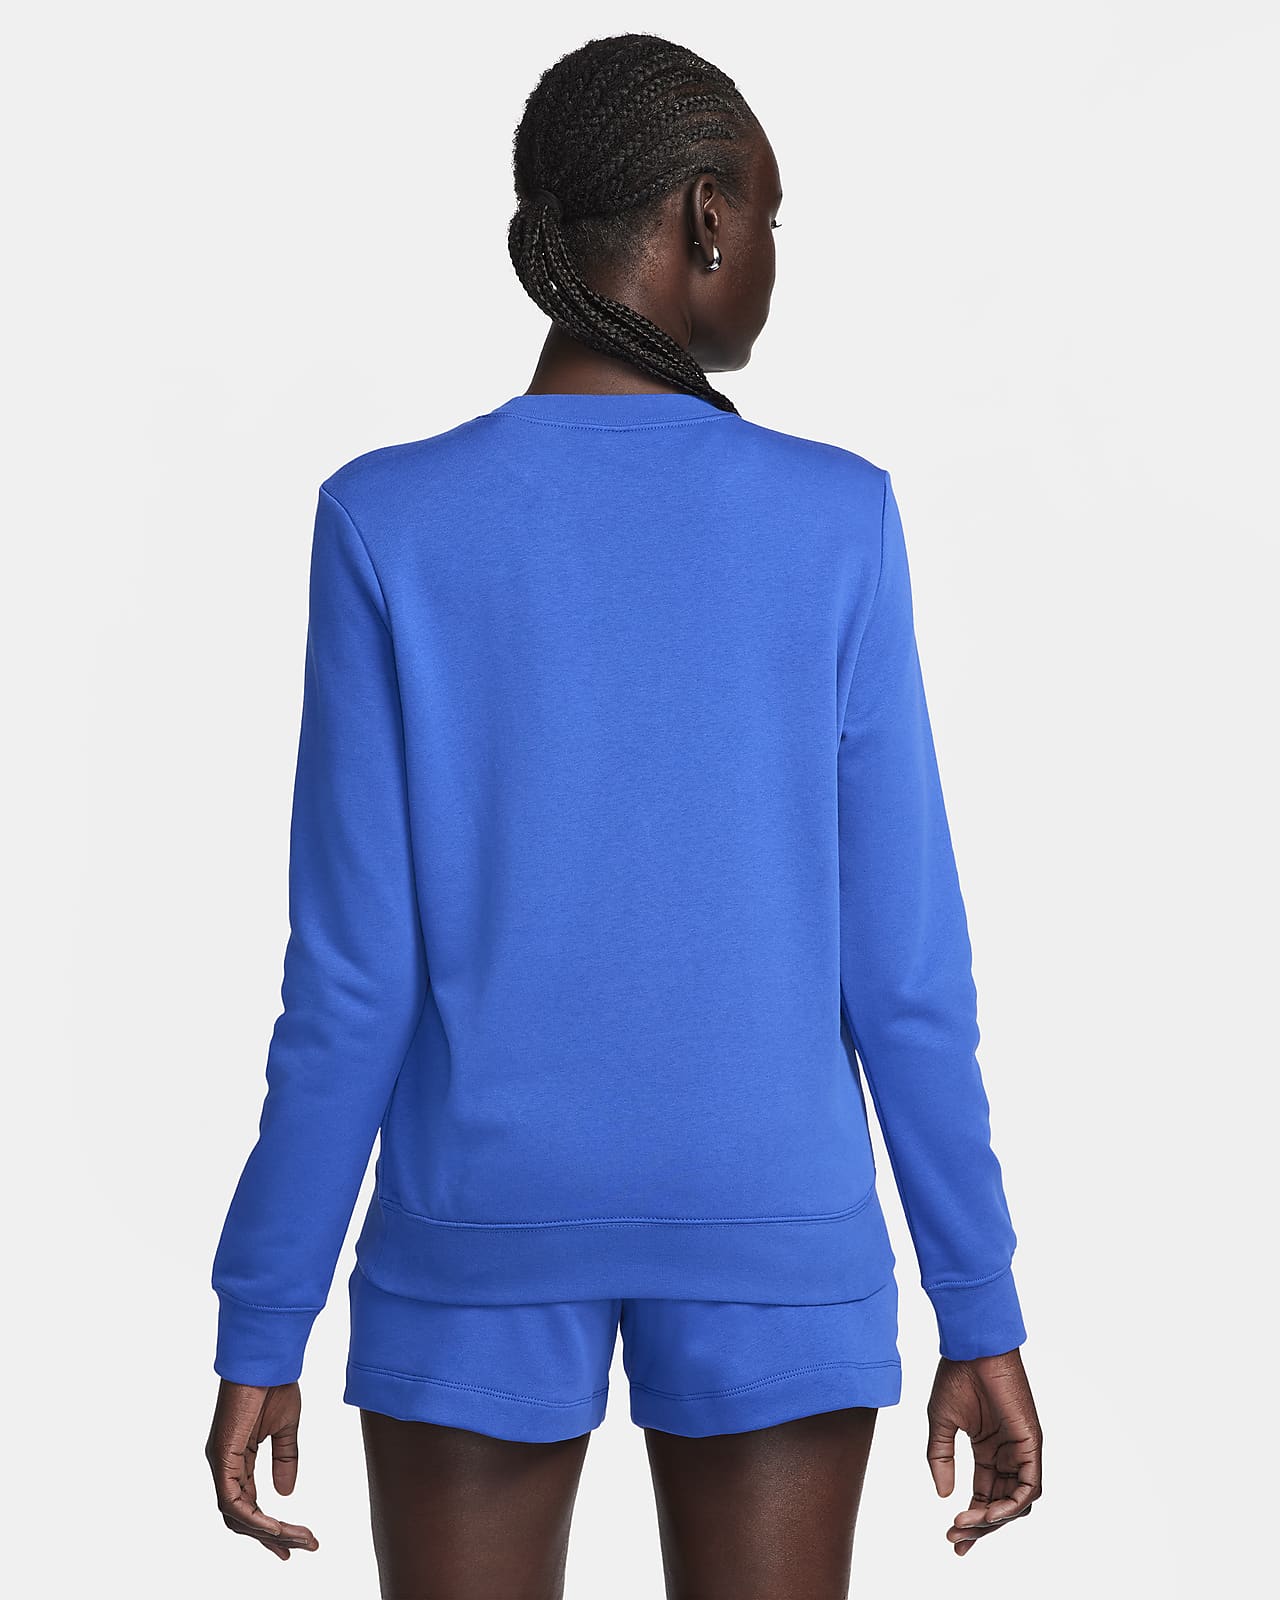 Rib Cotton Multicolor Ladies Designer Track Suit, Size: Free Size